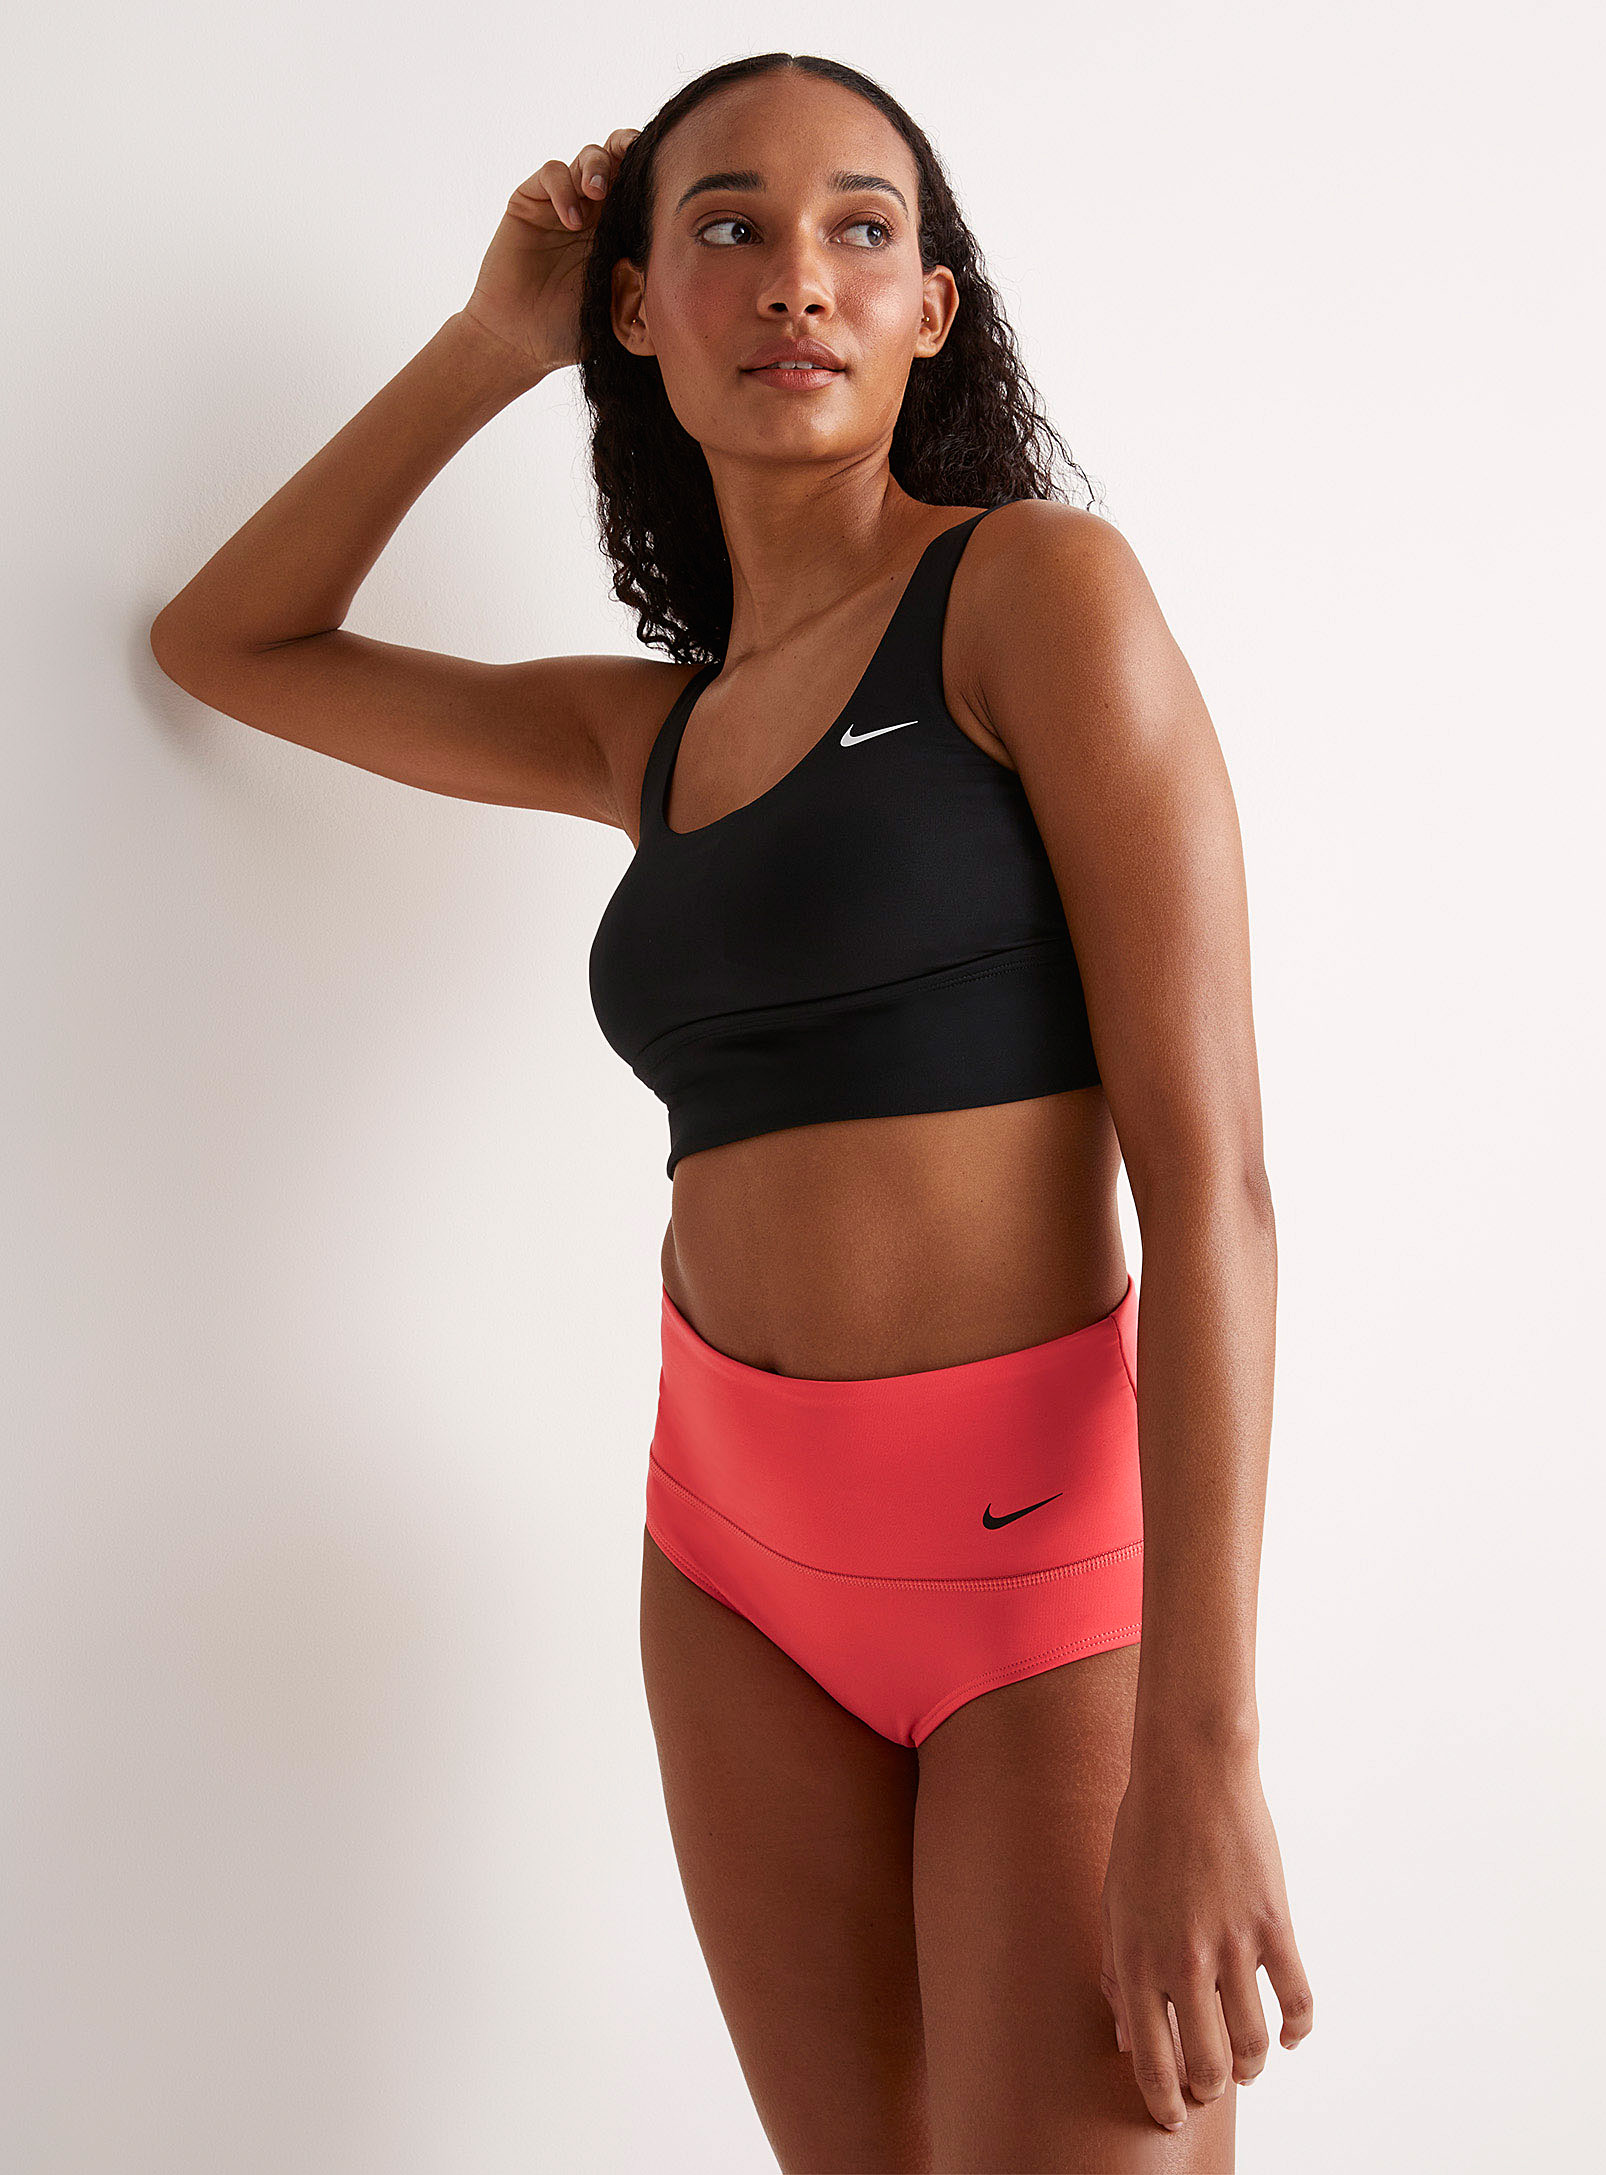 Nike - Women's Scoop back black bralette